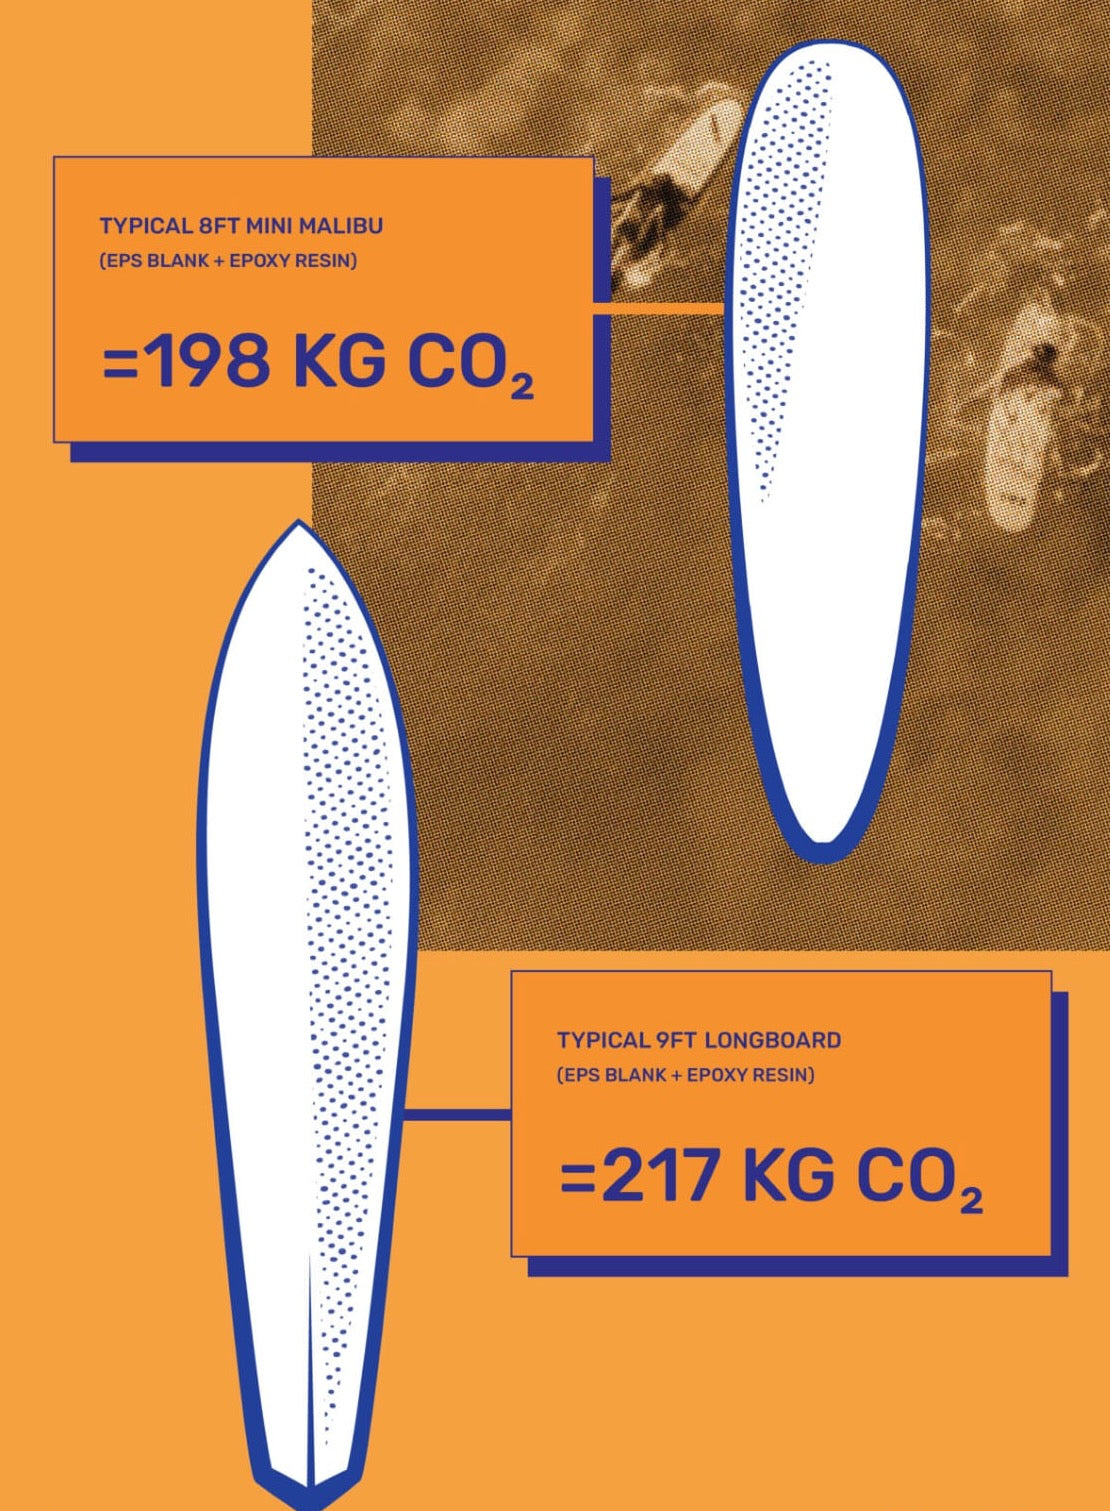 Carbon rock board. The standard size is 1.22 meters by 2.8 meters. Nee